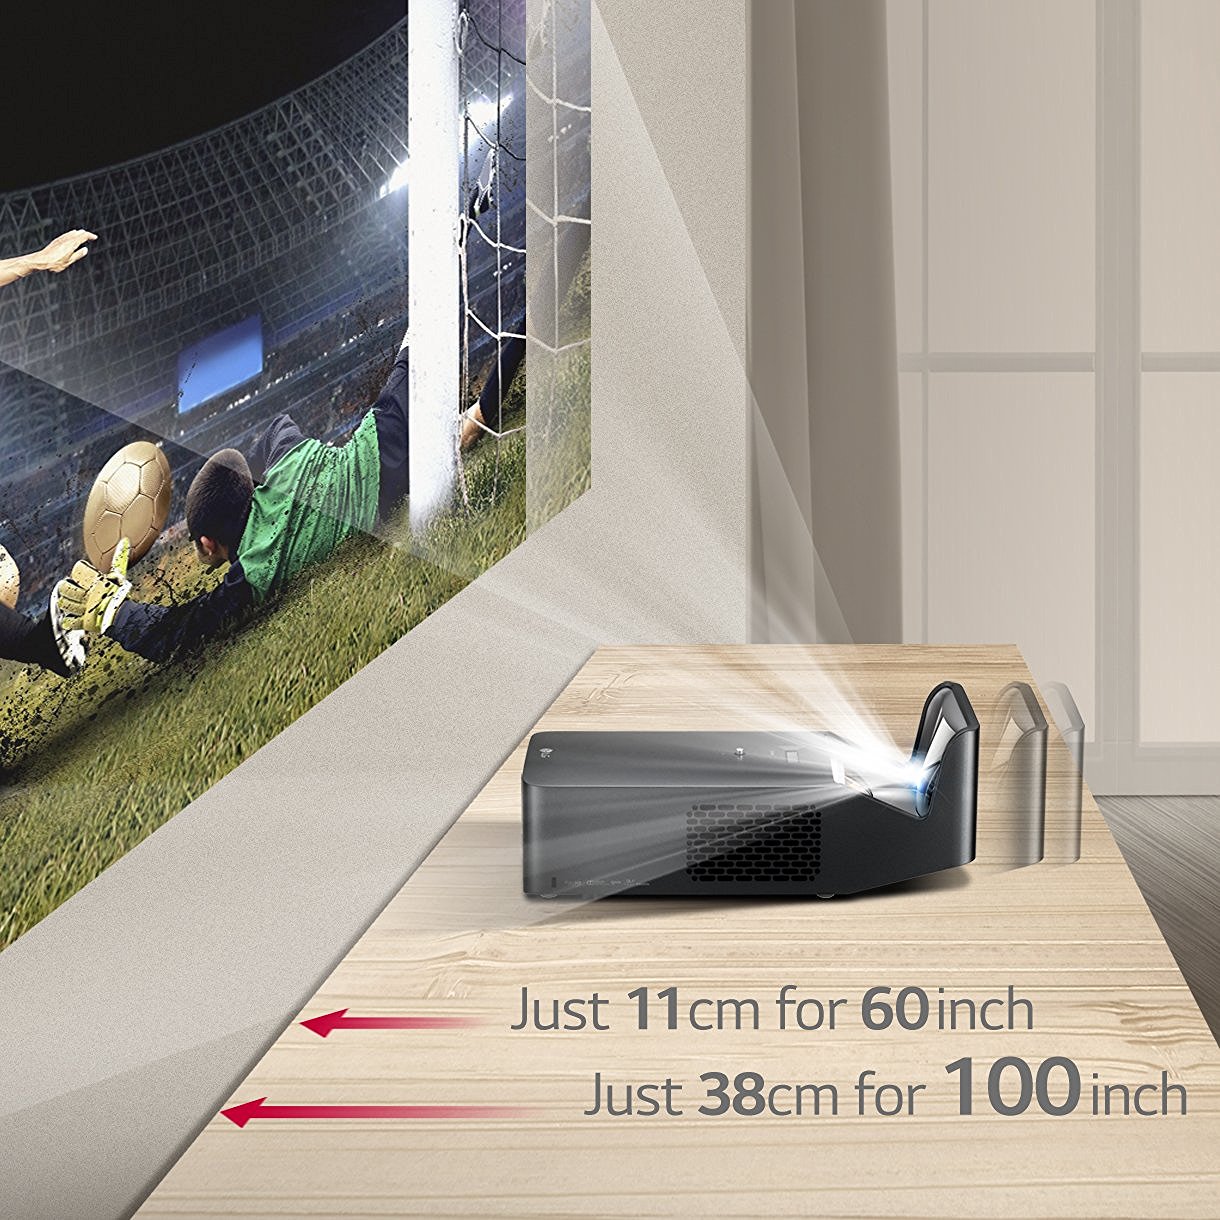 LG ultra short throw projector pf1000u-5